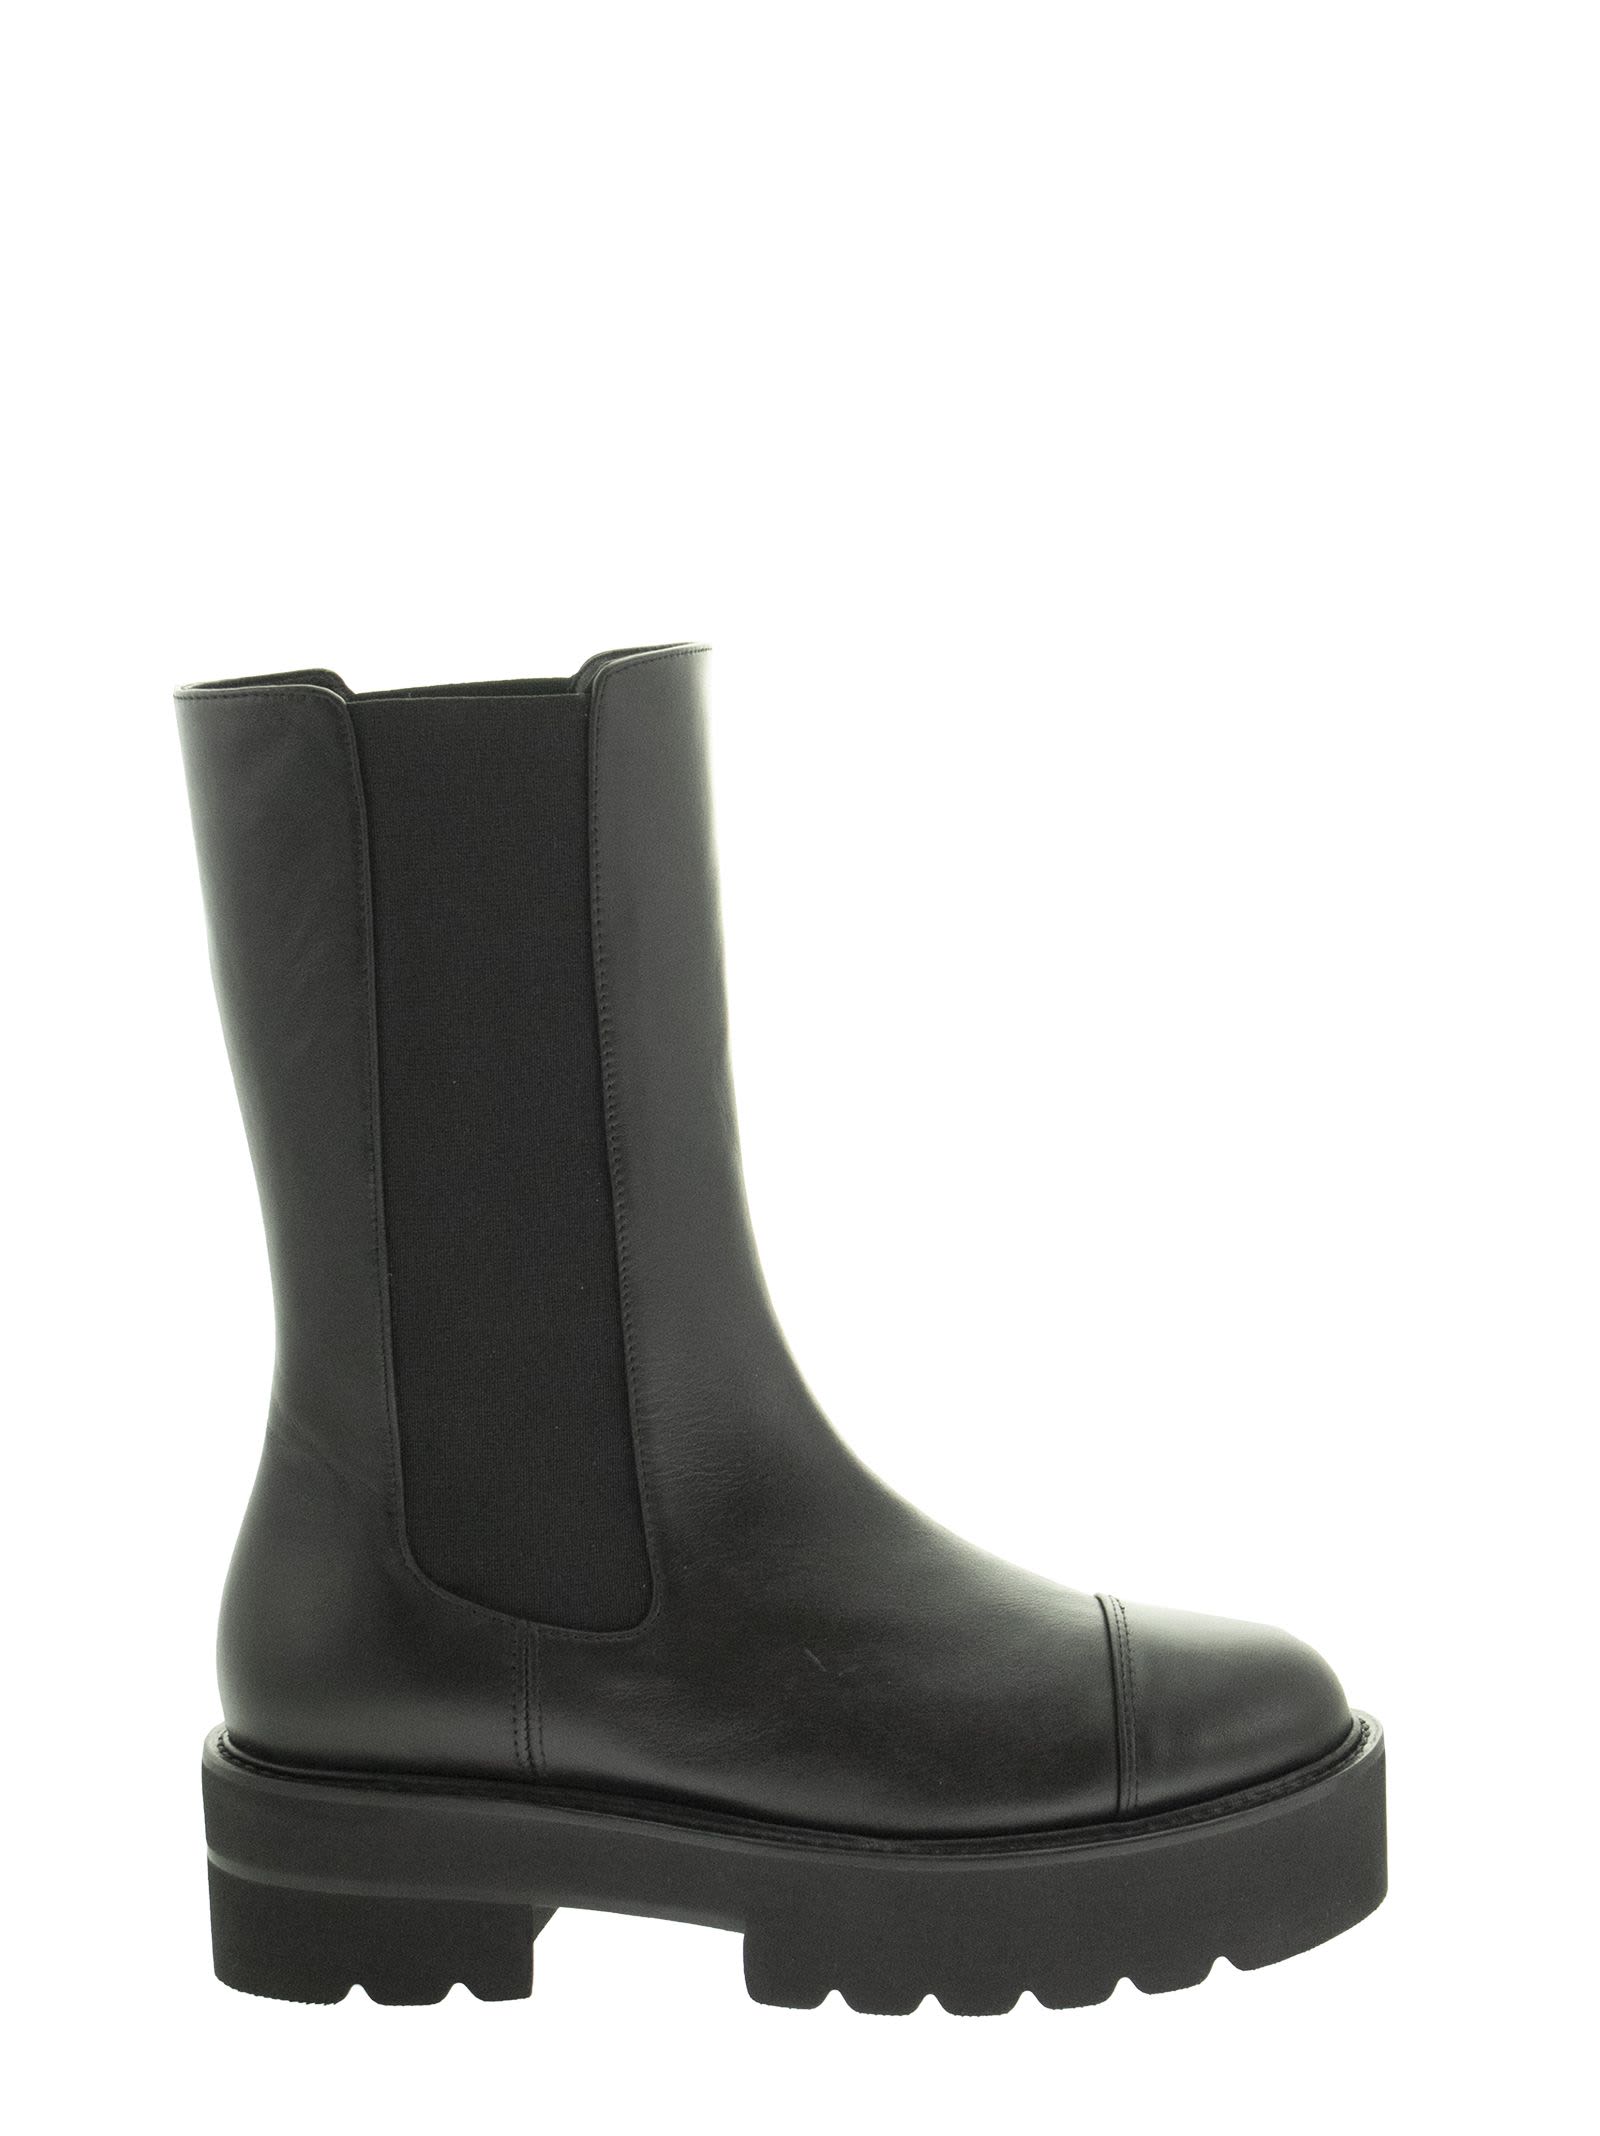 Buy Stuart Weitzman Presley Ultralift - Calf Leather Boot online, shop Stuart Weitzman shoes with free shipping